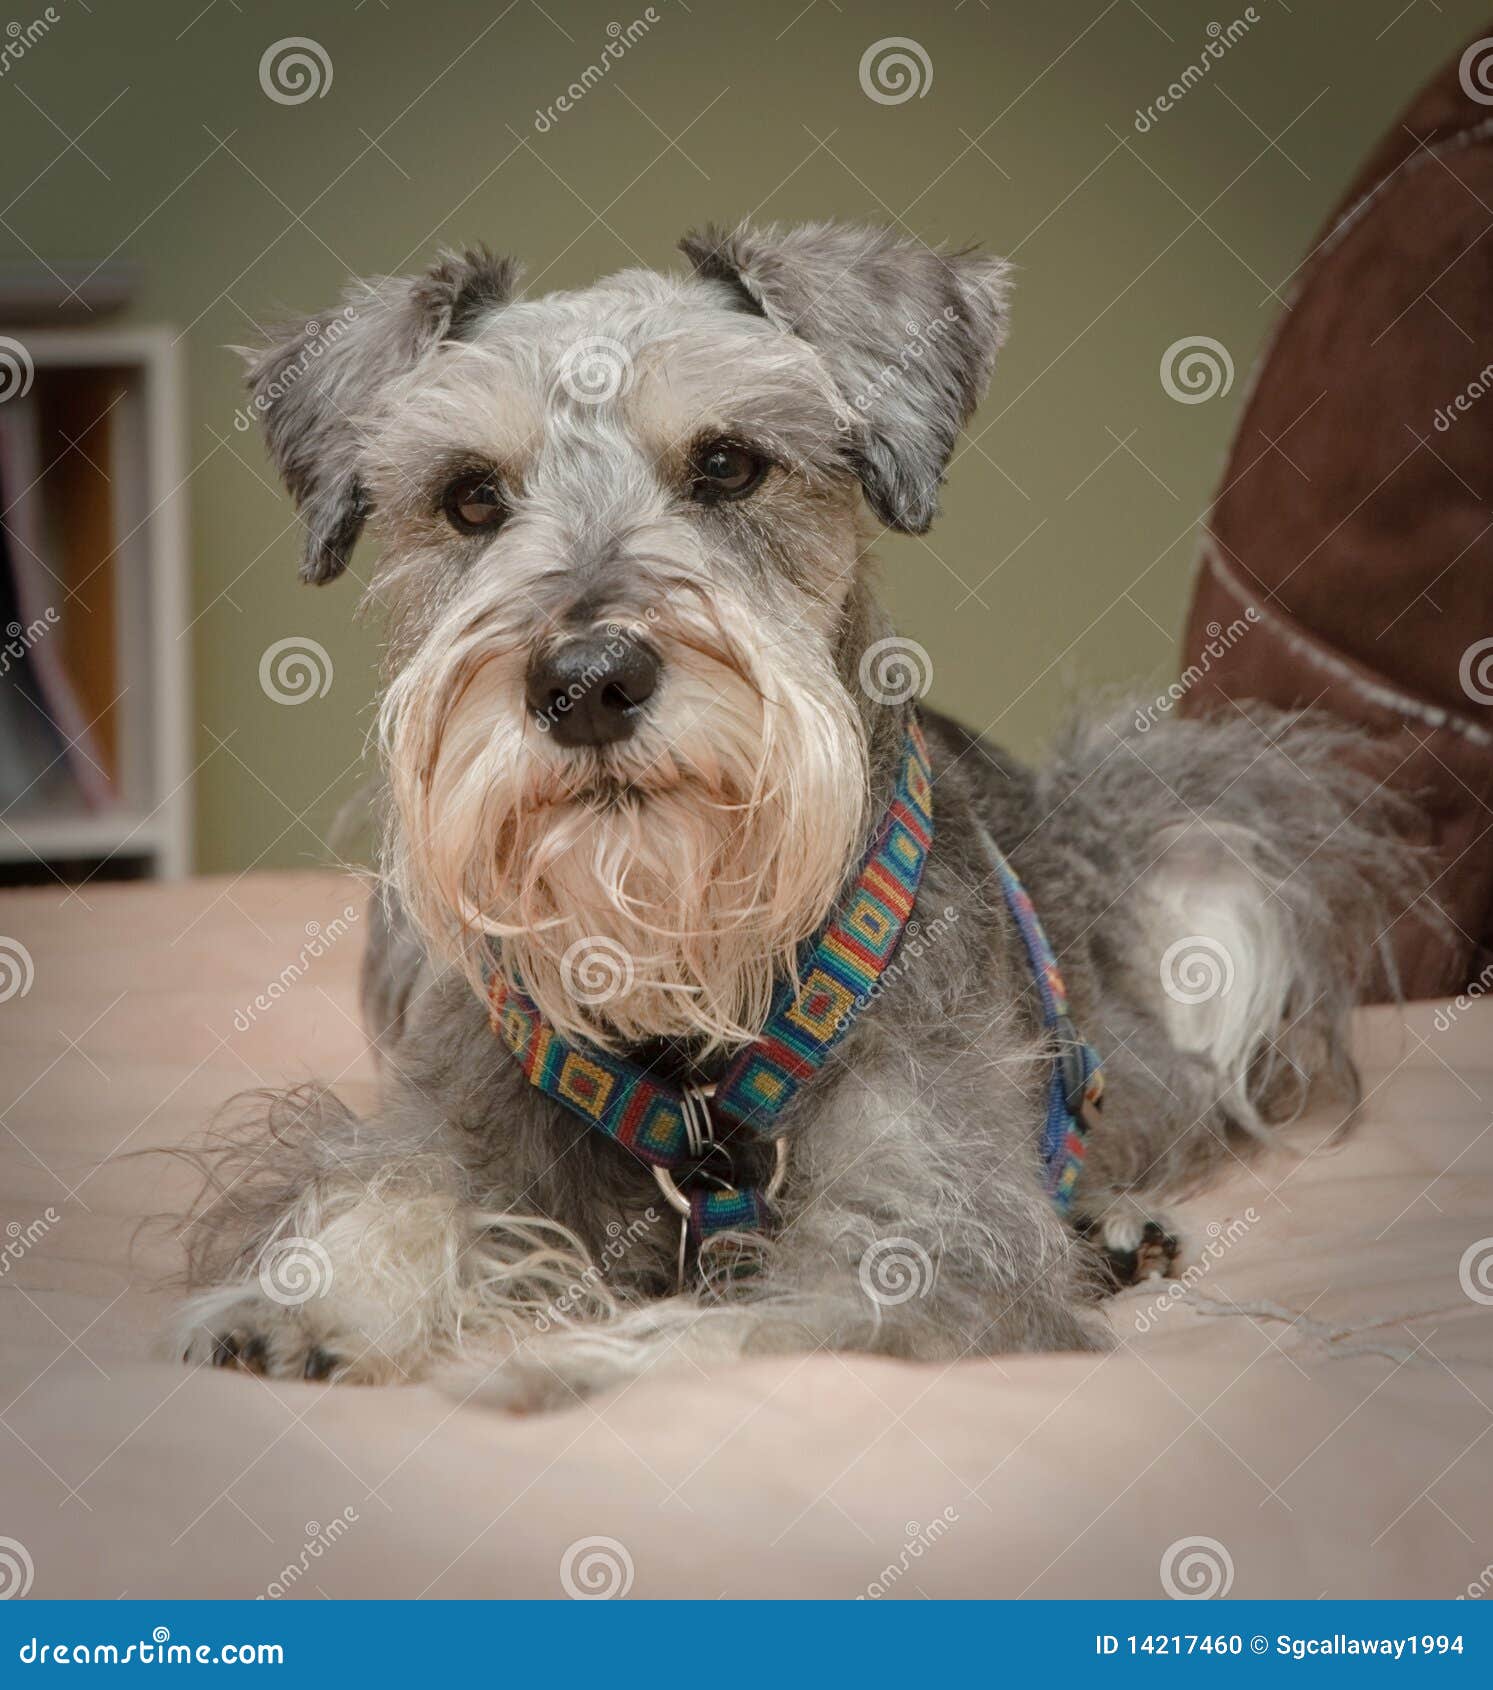 Cozy Small Grey Dog Stock Photo - Image: 14217460